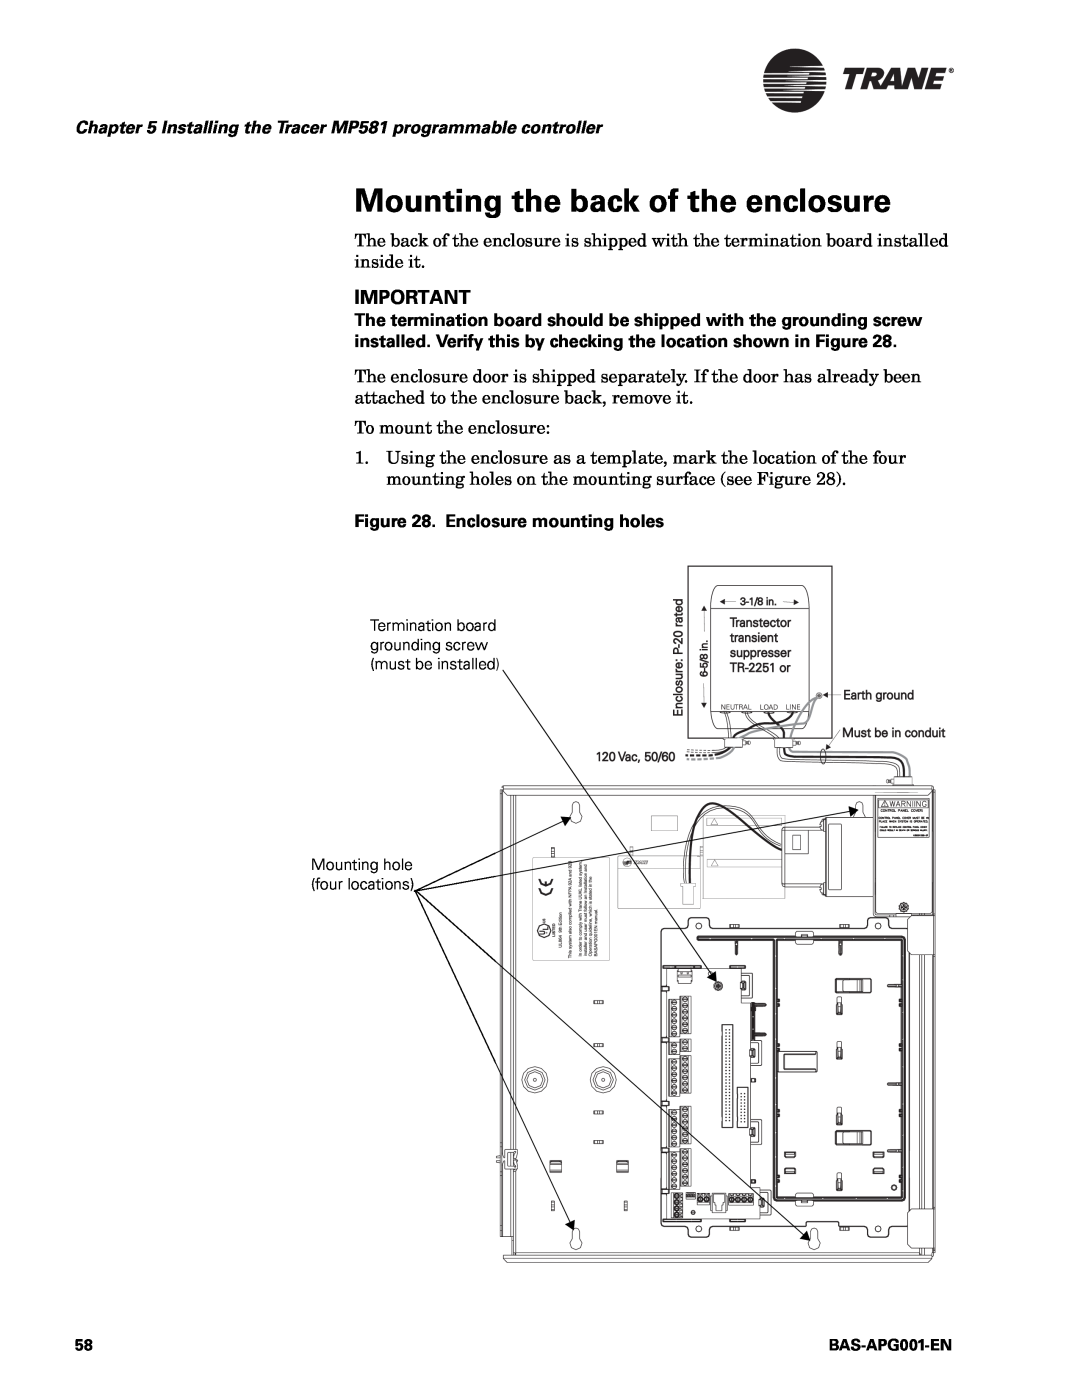 Trane BAS-APG001-EN manual Mounting the back of the enclosure, Enclosure mounting holes 